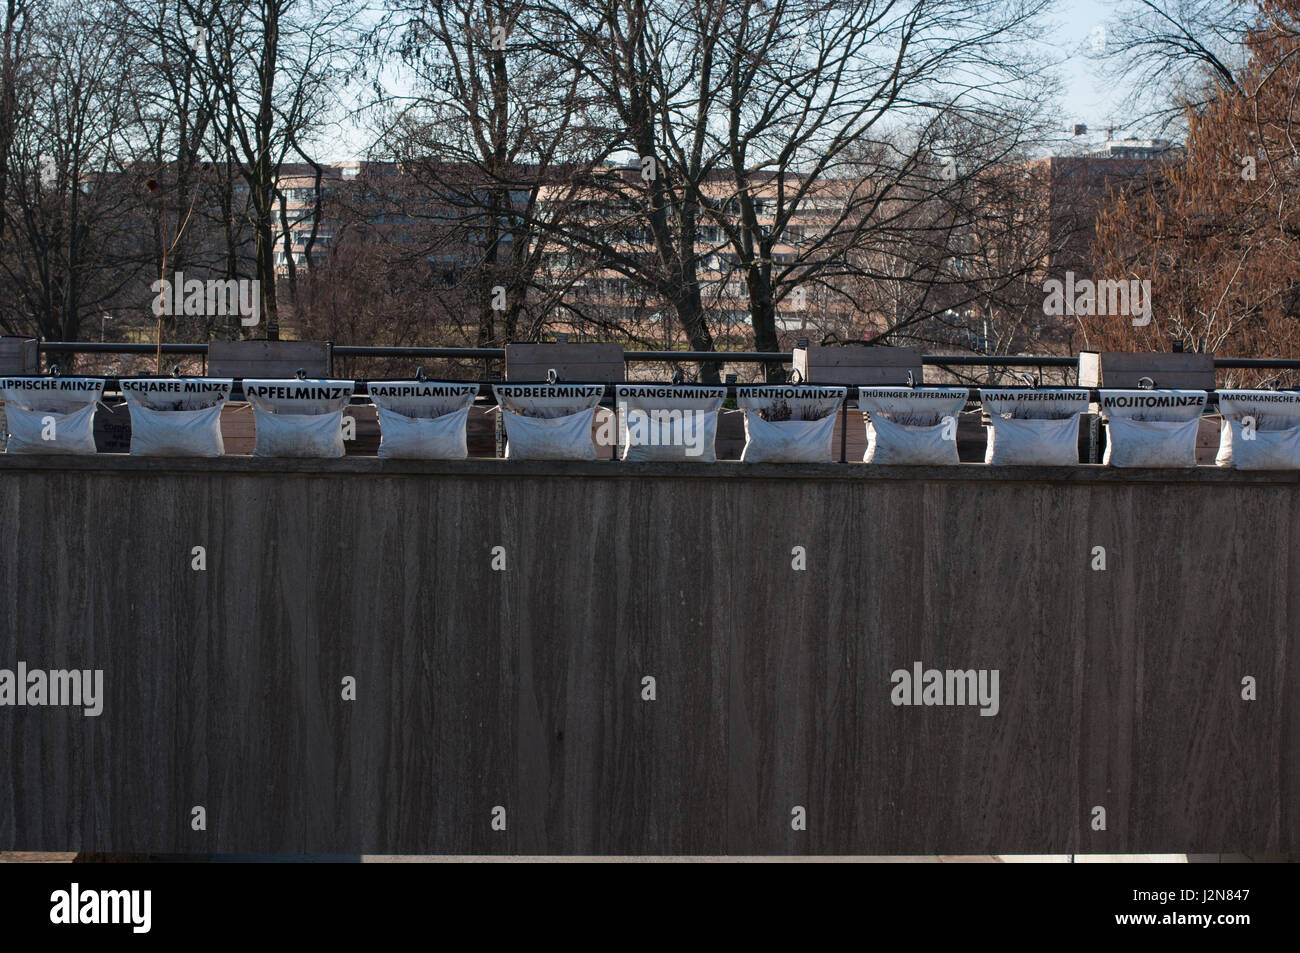 Jardinage urbain sur le toit de Haus der Kulturen der Welt, Berlin, Allemagne. Temporärer / Kunstinstallation HdKdW Stadtgarten, Berlin. Banque D'Images